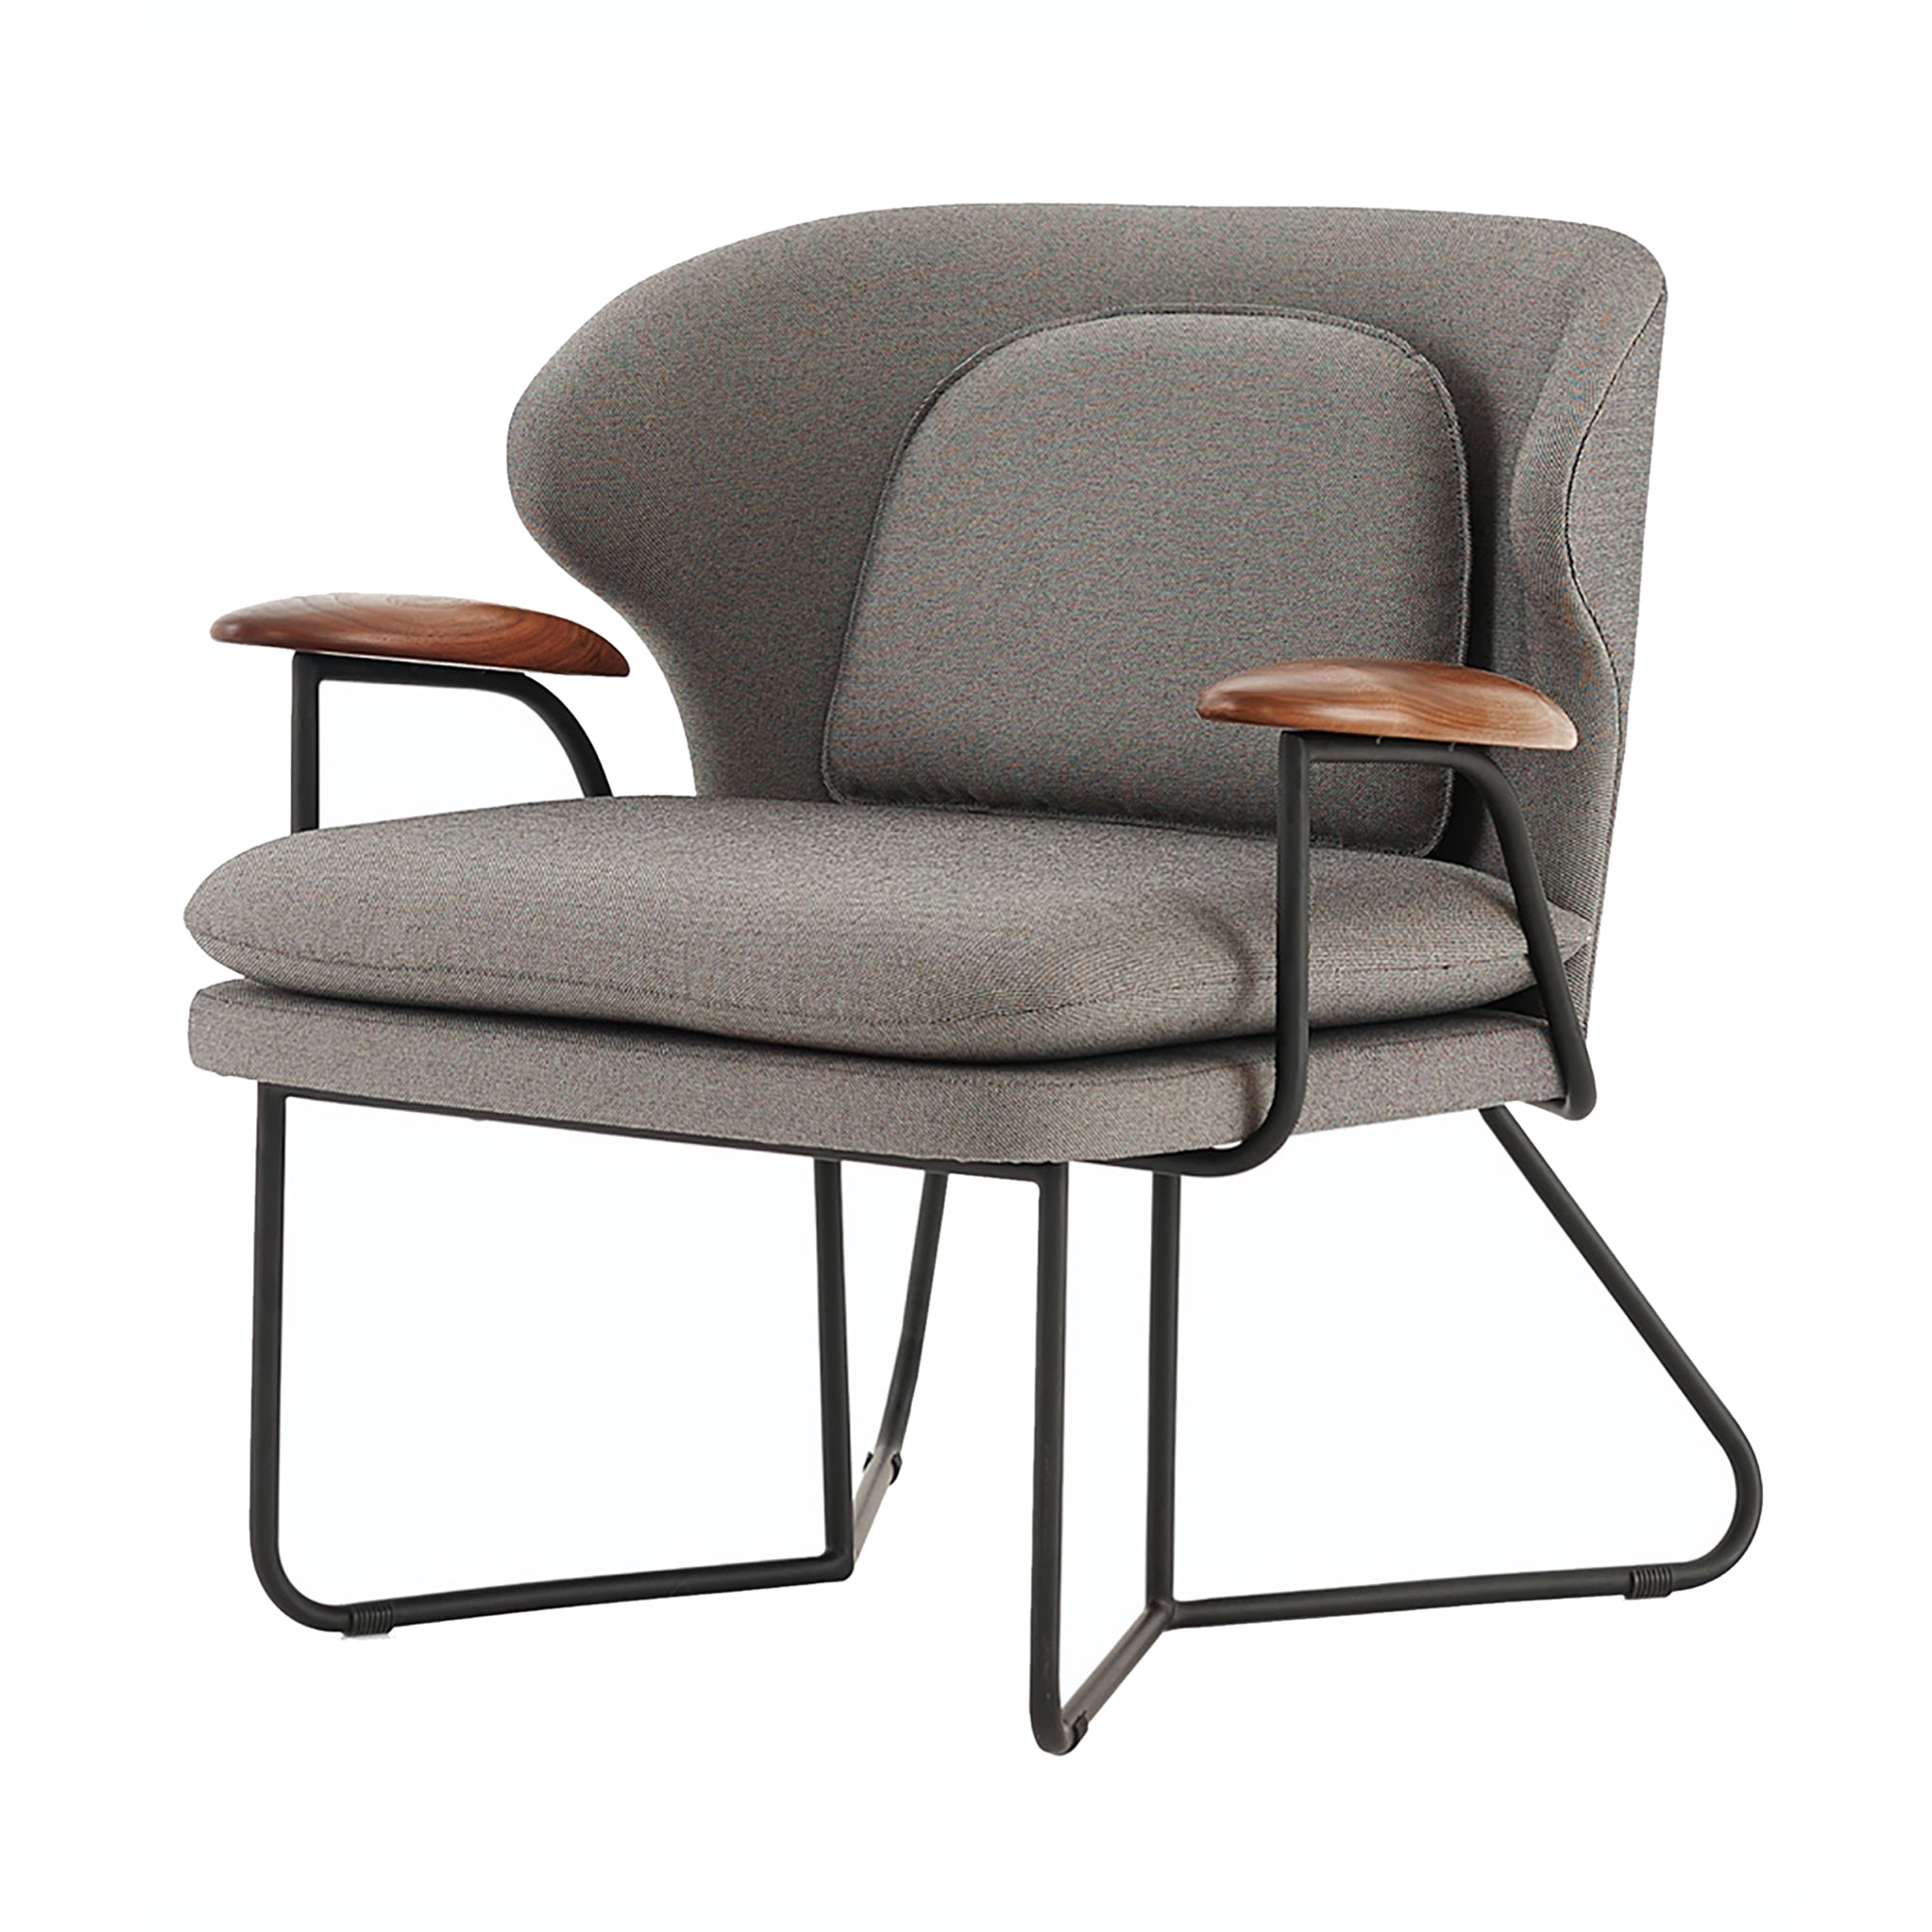 Chillax Lounge Chair: Natural Walnut